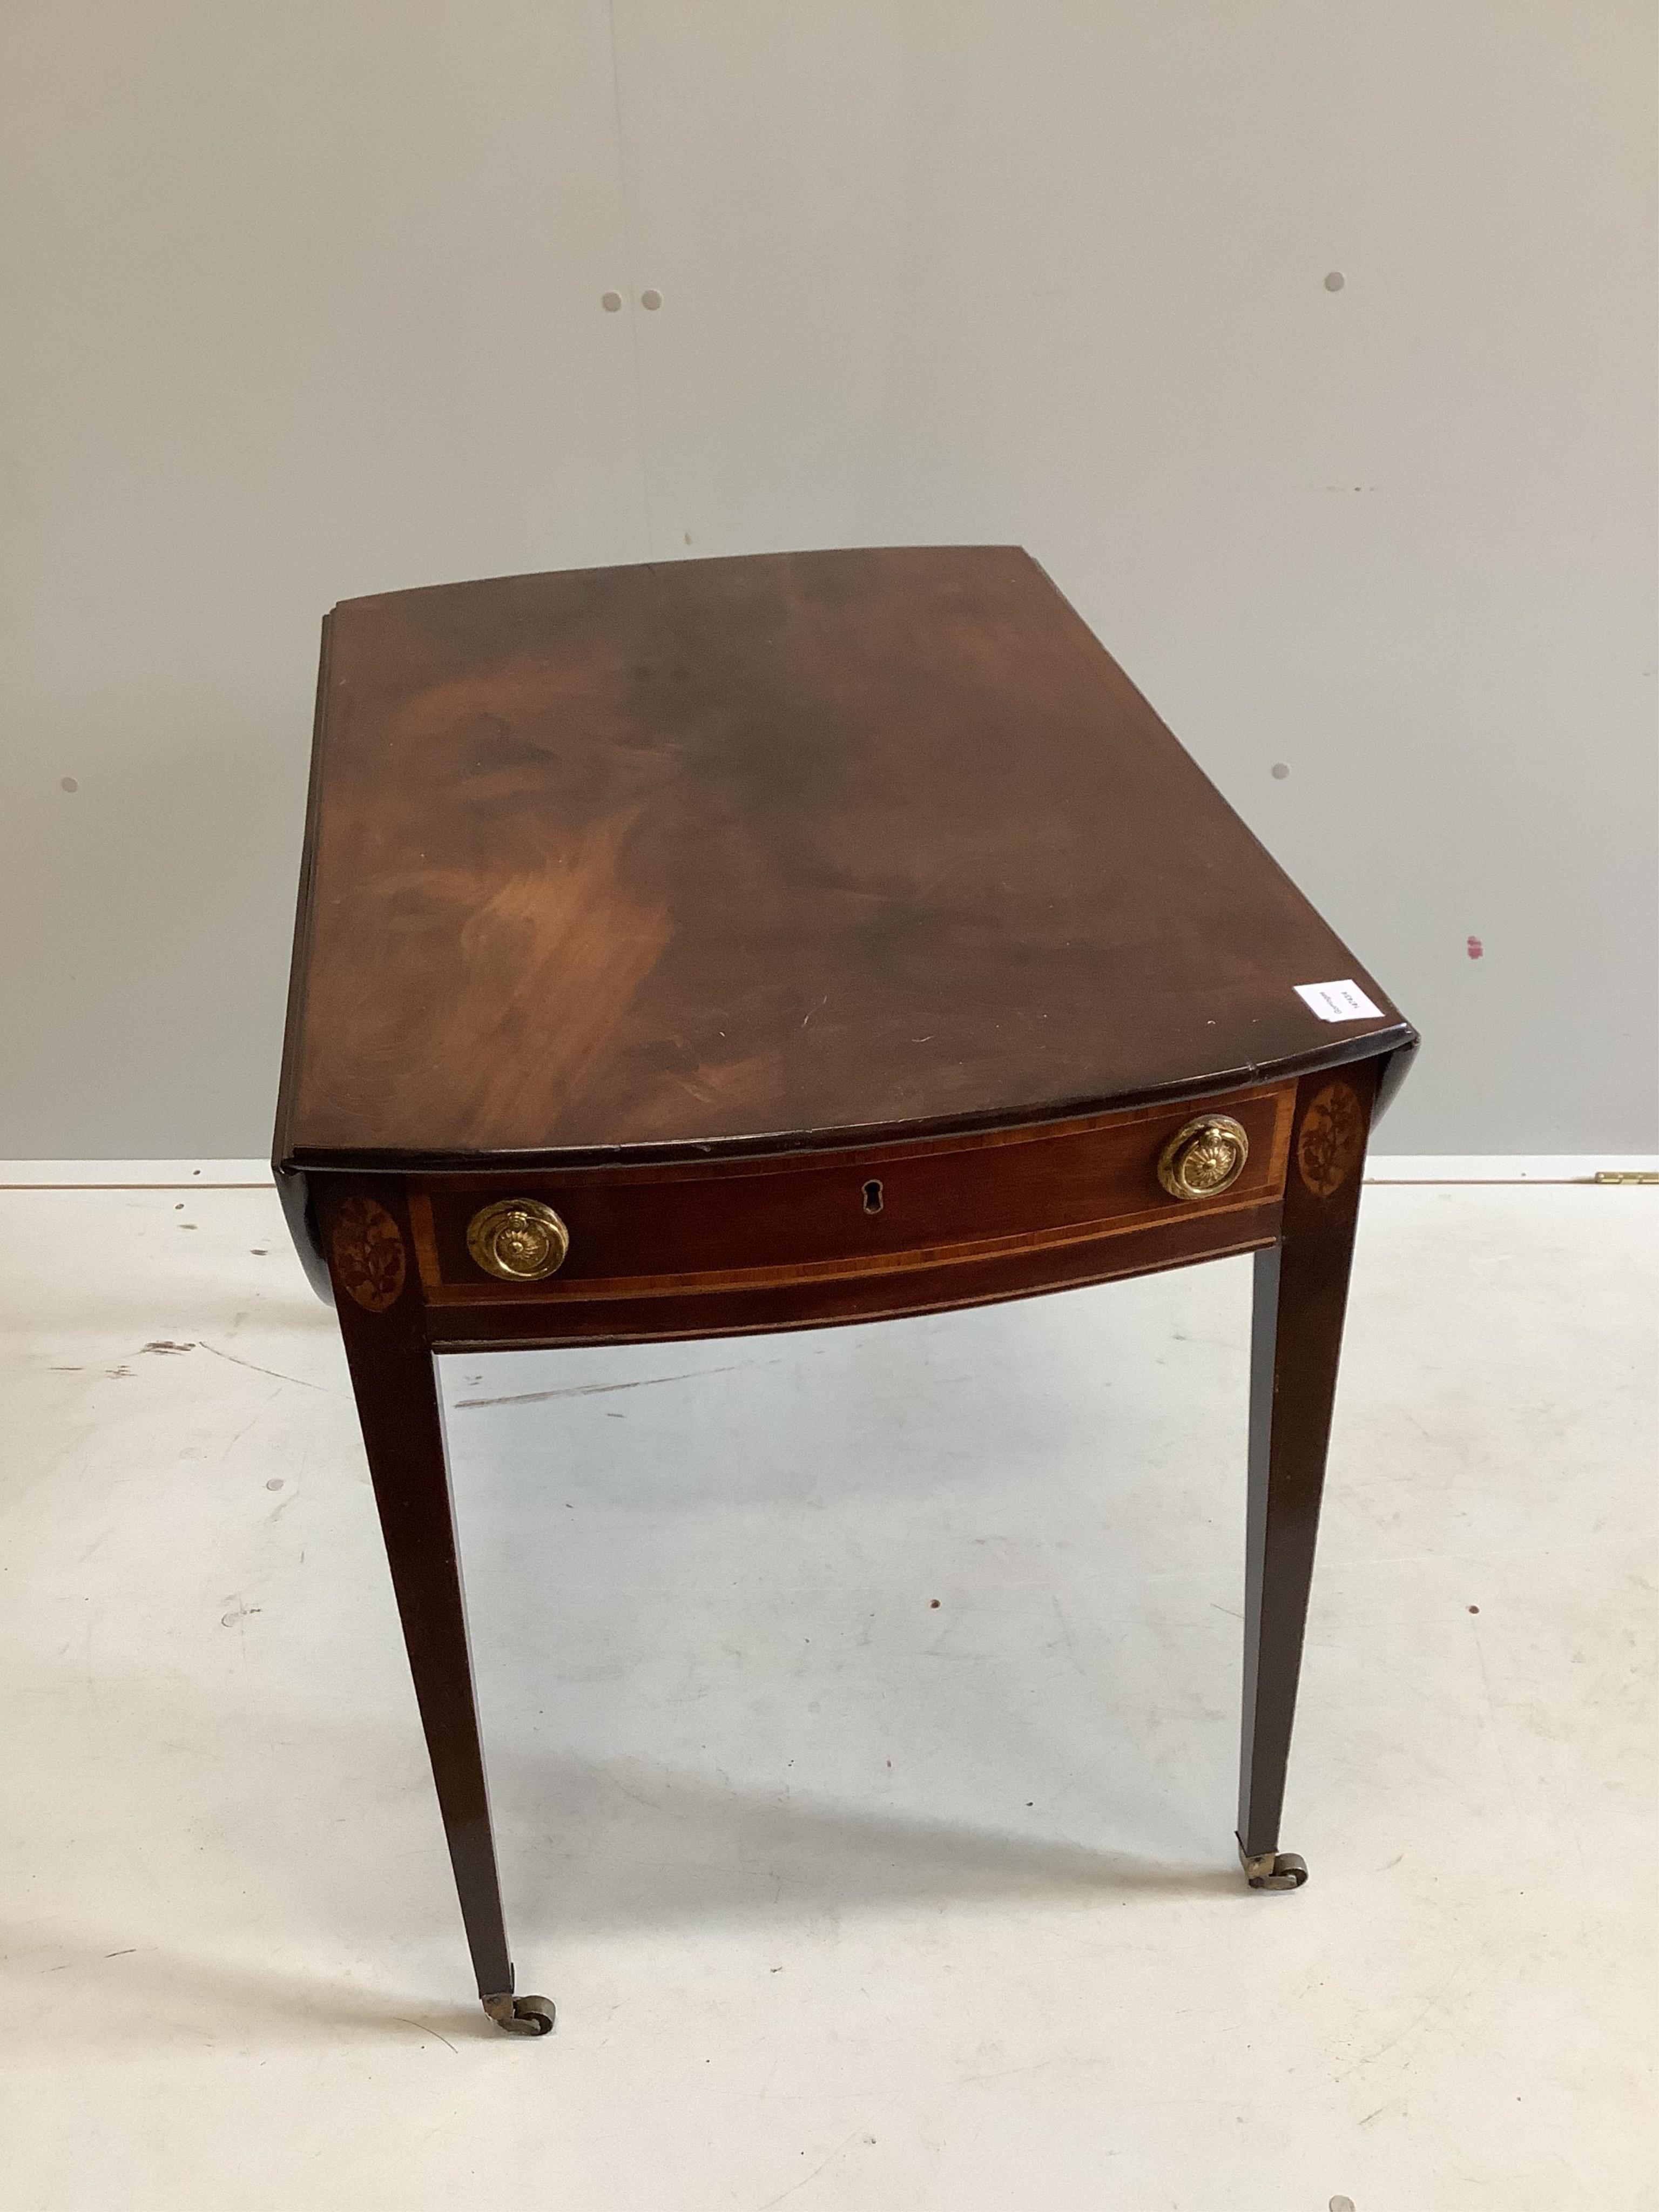 A George III mahogany Pembroke table, width 86cm, depth 57cm, height 73cm. Condition - fair